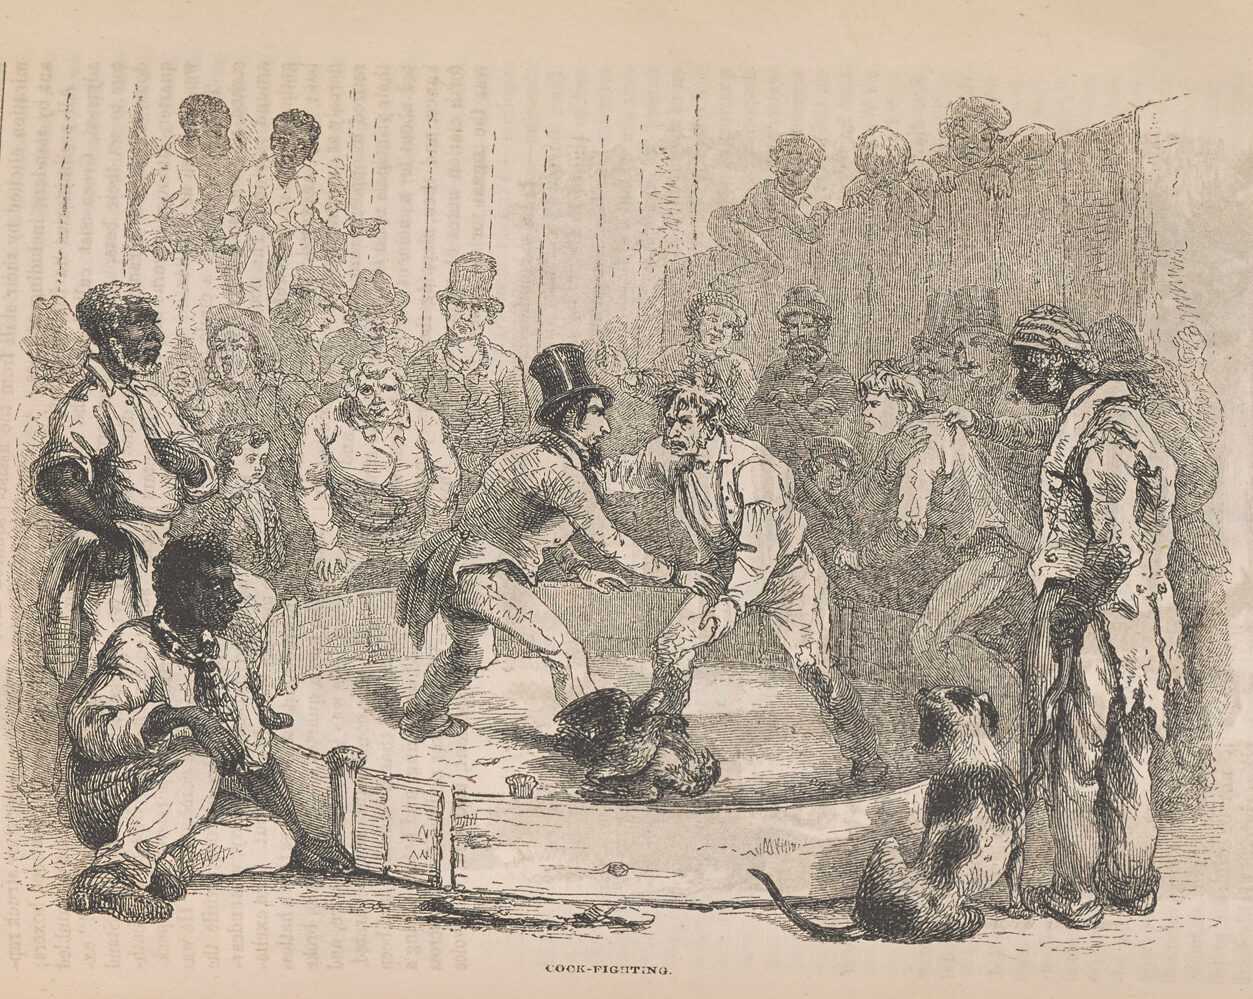 Illustration of cockfighting